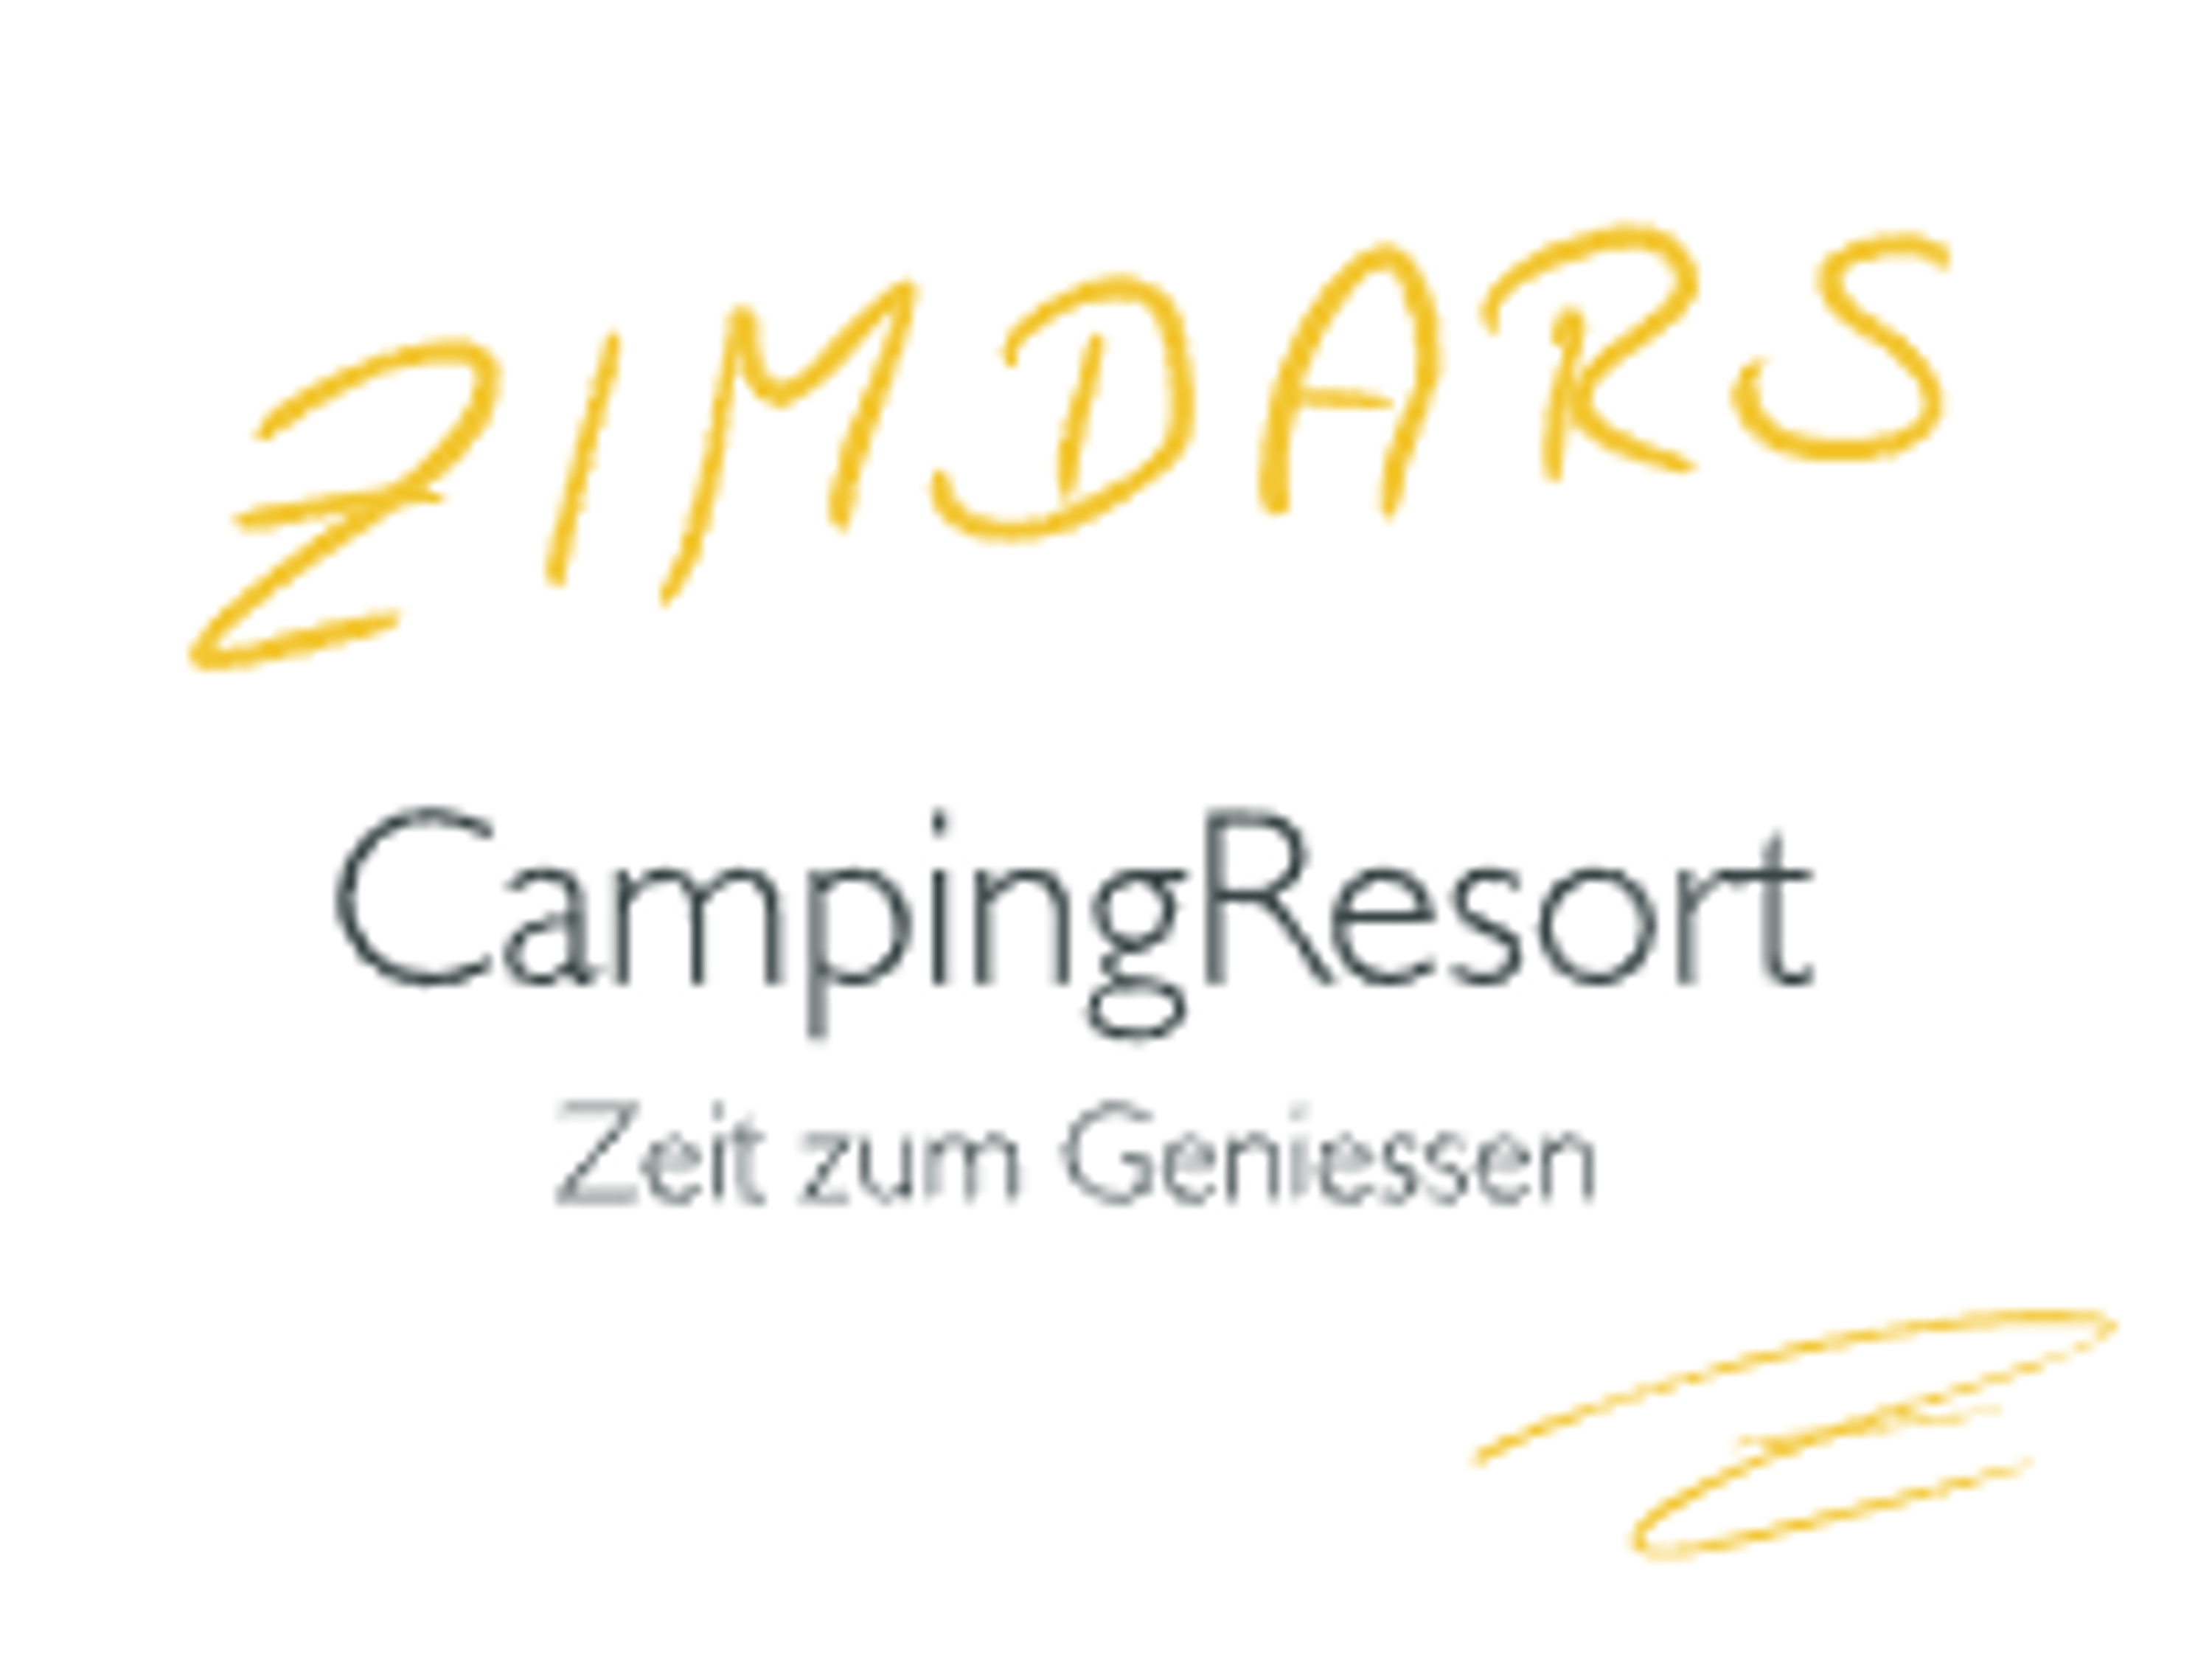 ZIMDARS CampingResort